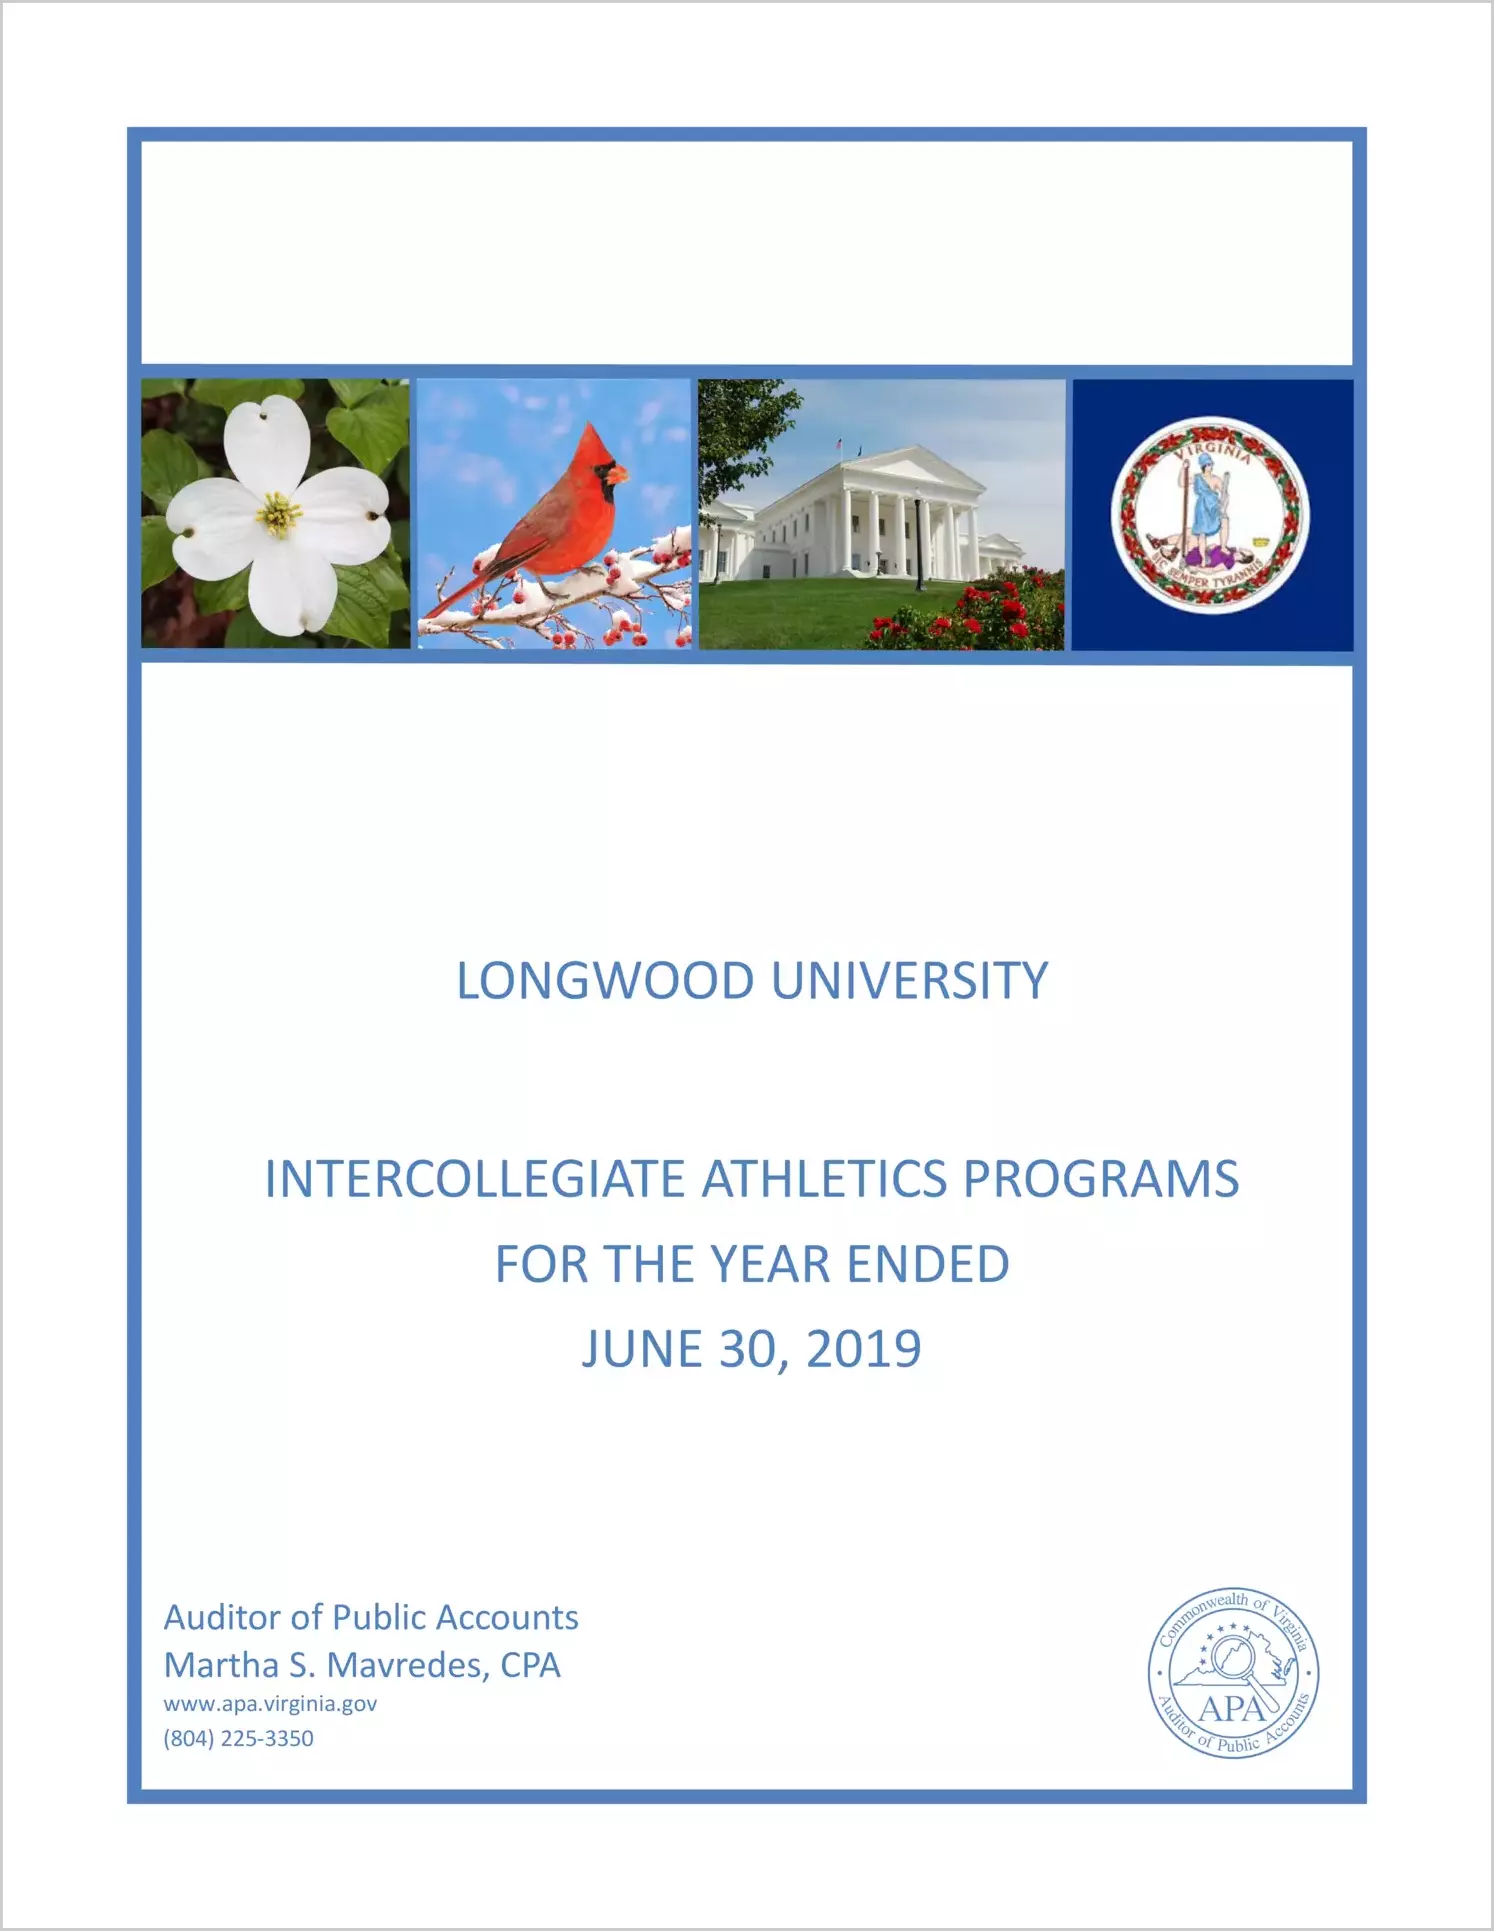 Longwood University Intercollegiate Athletics Programs for the year ended June 30, 2019